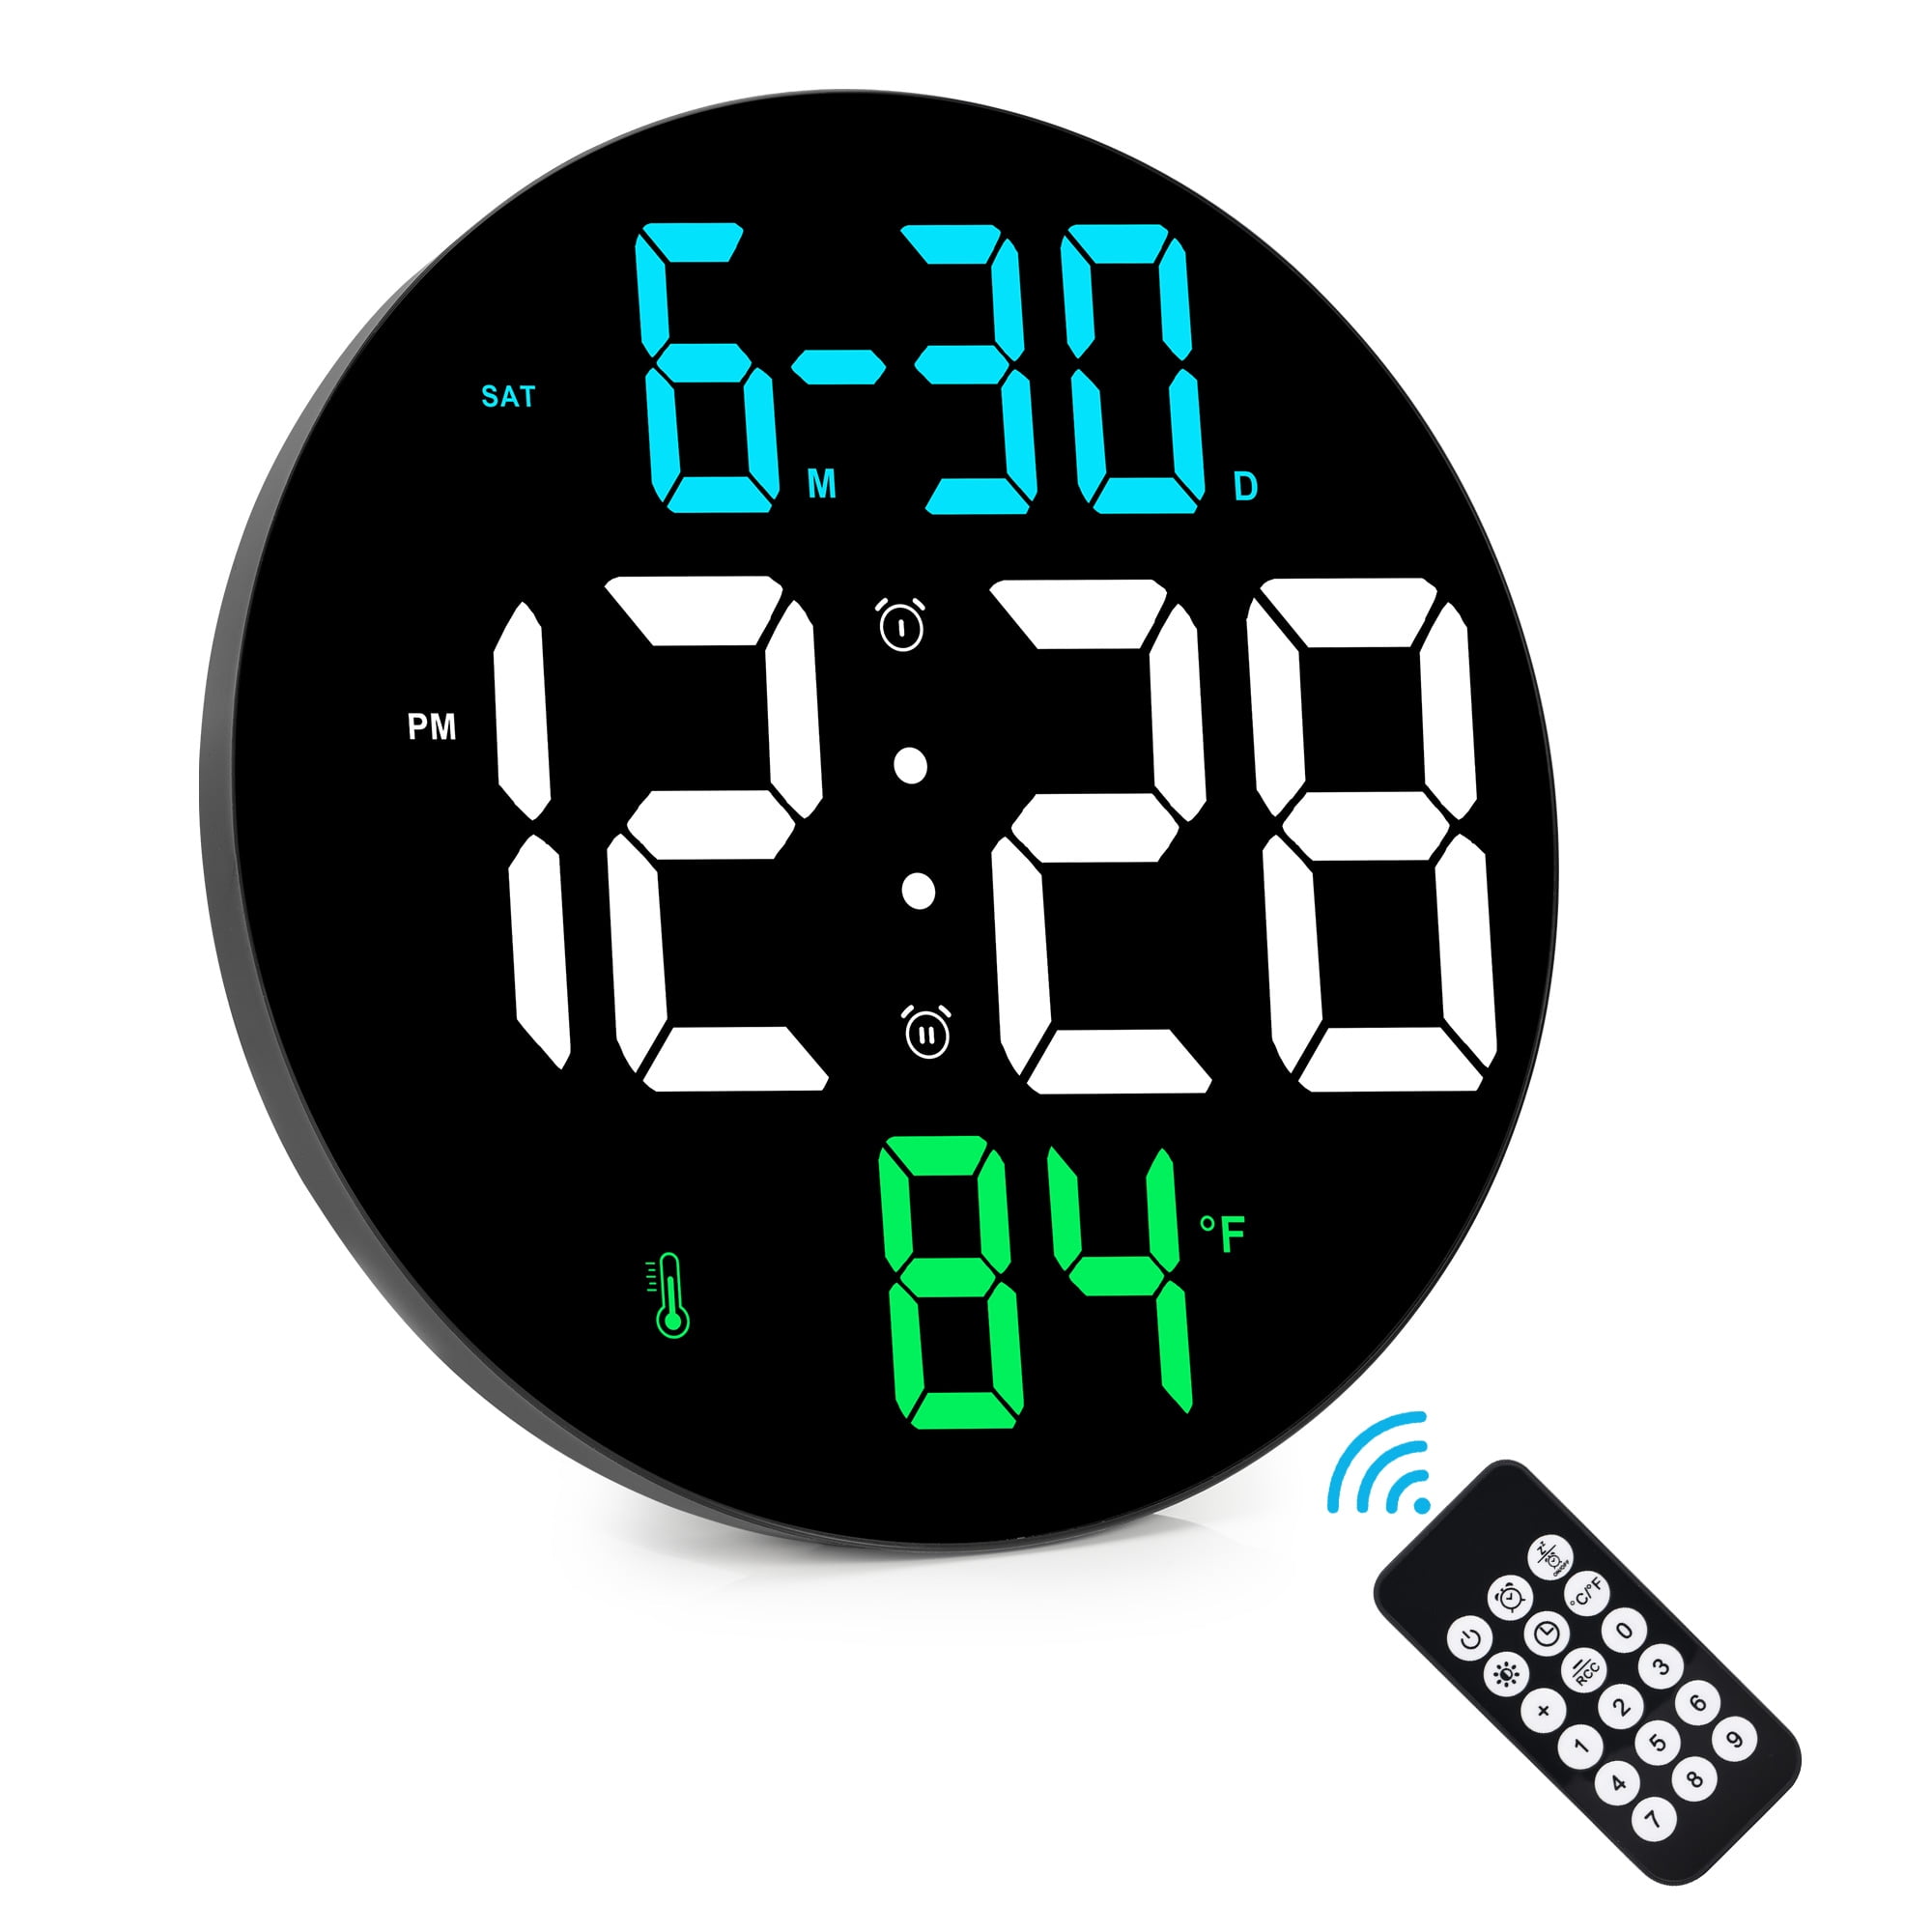 Digital Wall Clock,LED Large Digits Display,Dual Alarm Clock,Green